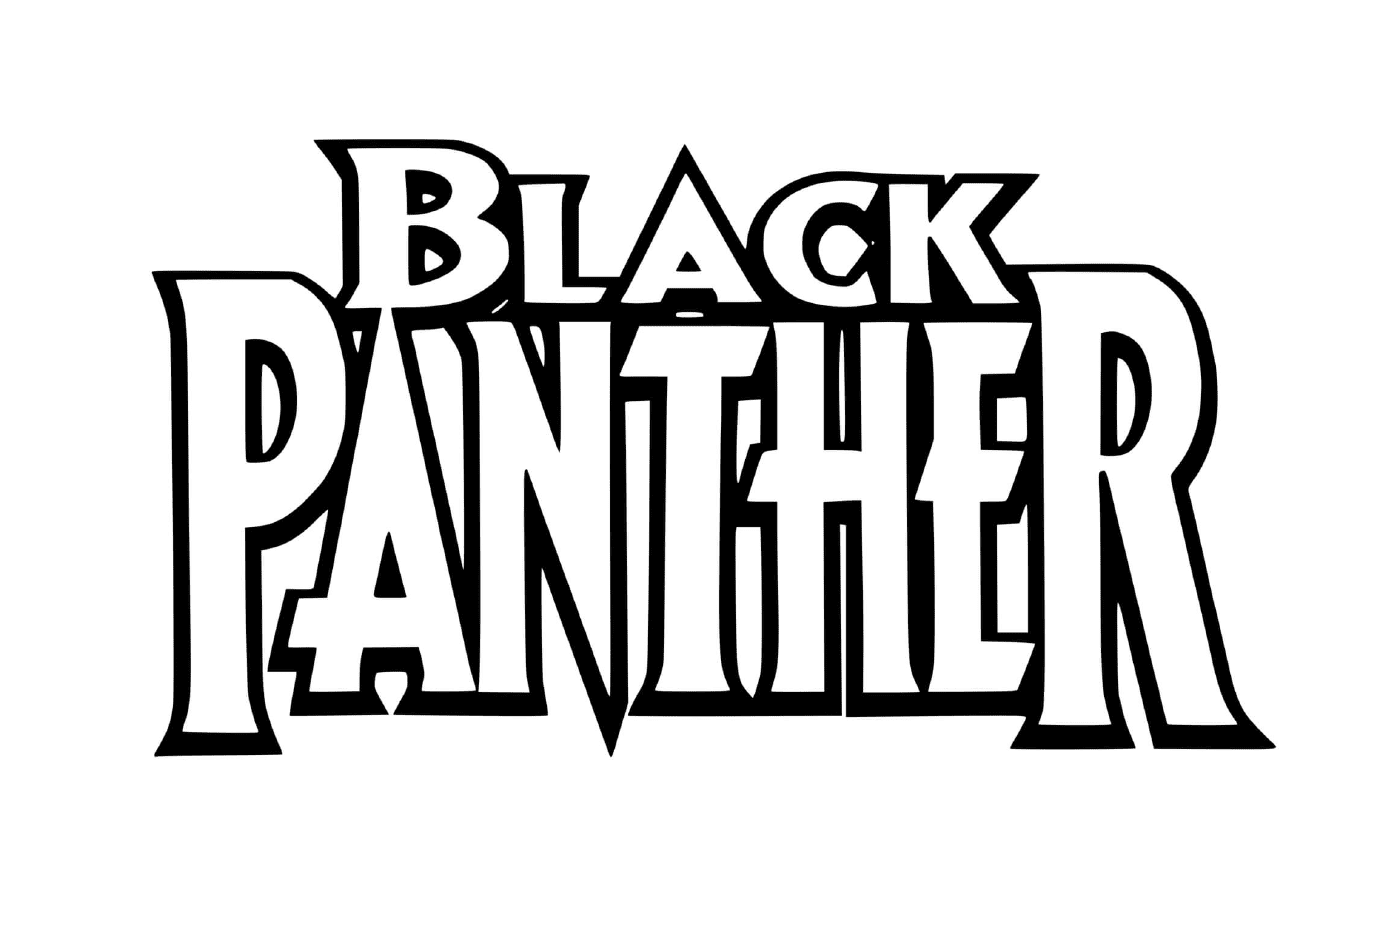  Logo Pantera nera 